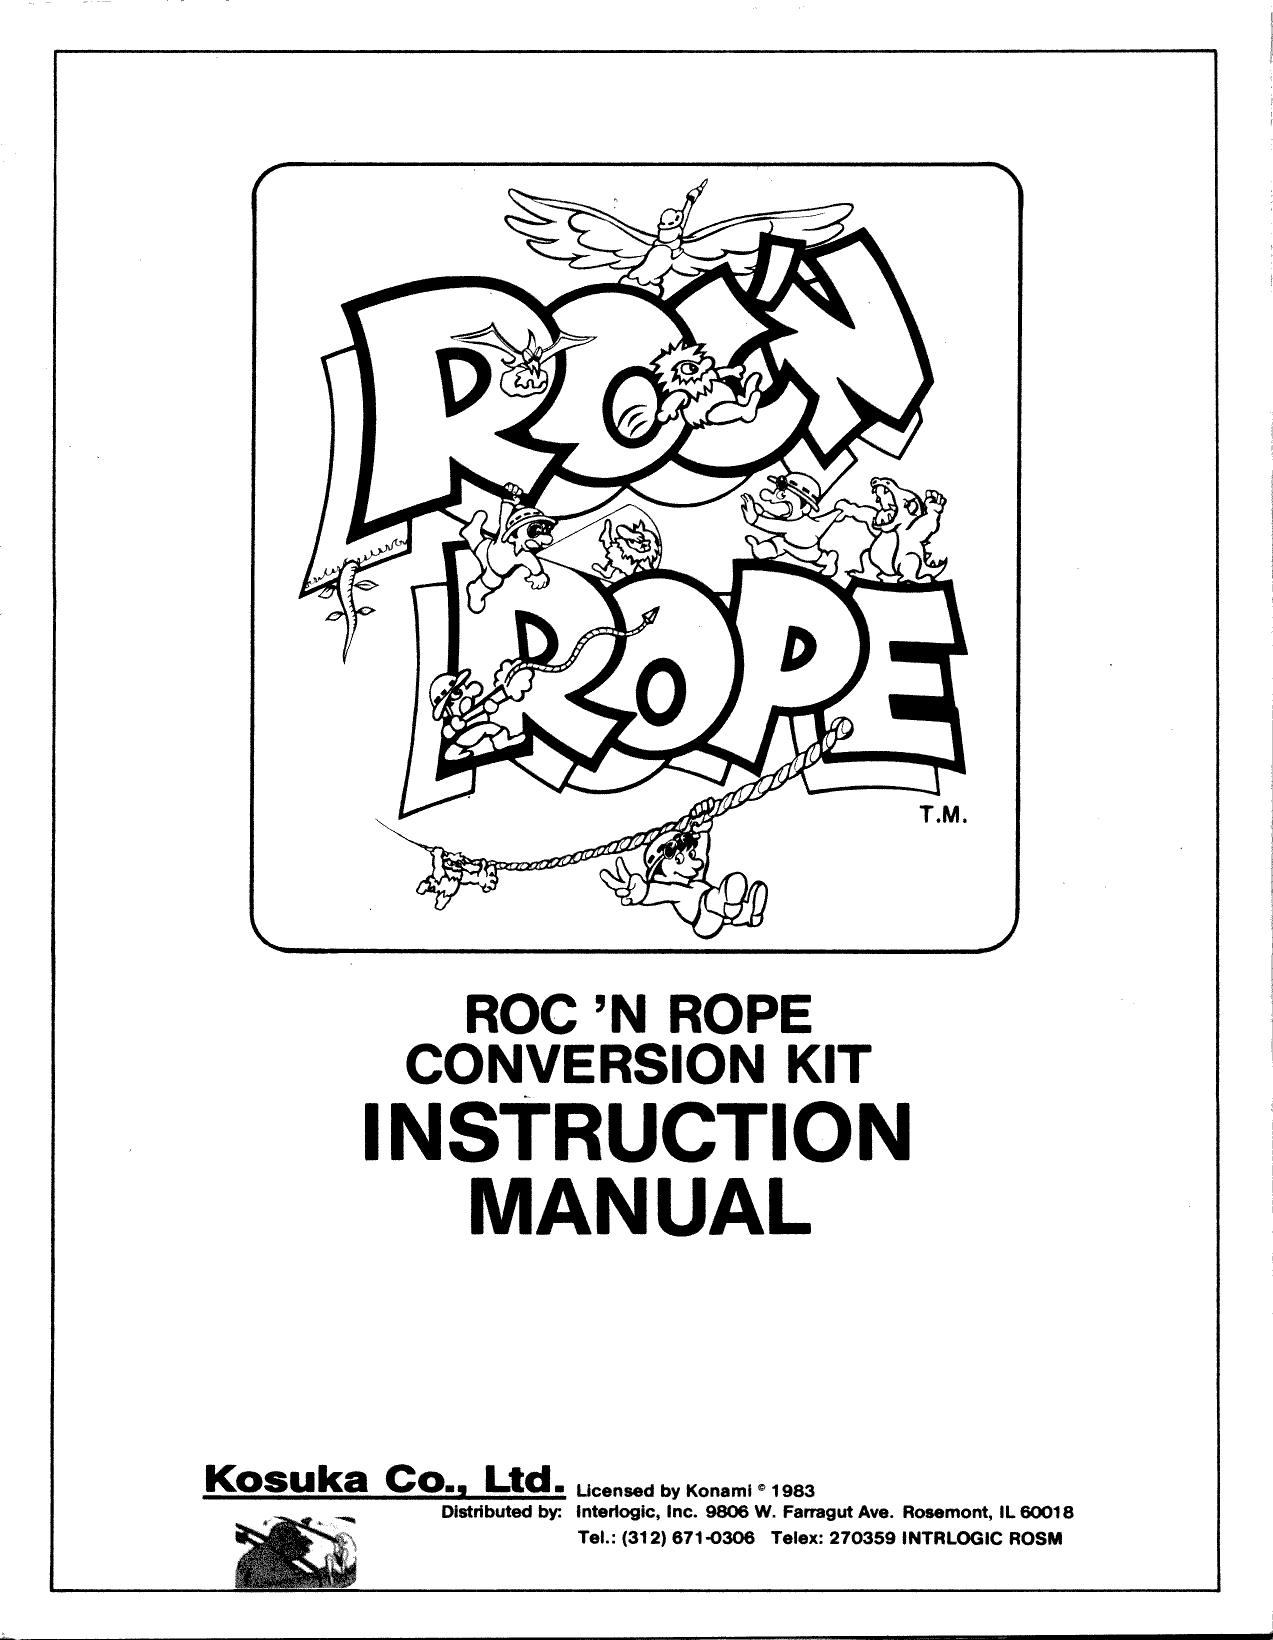 RocNRope Manual